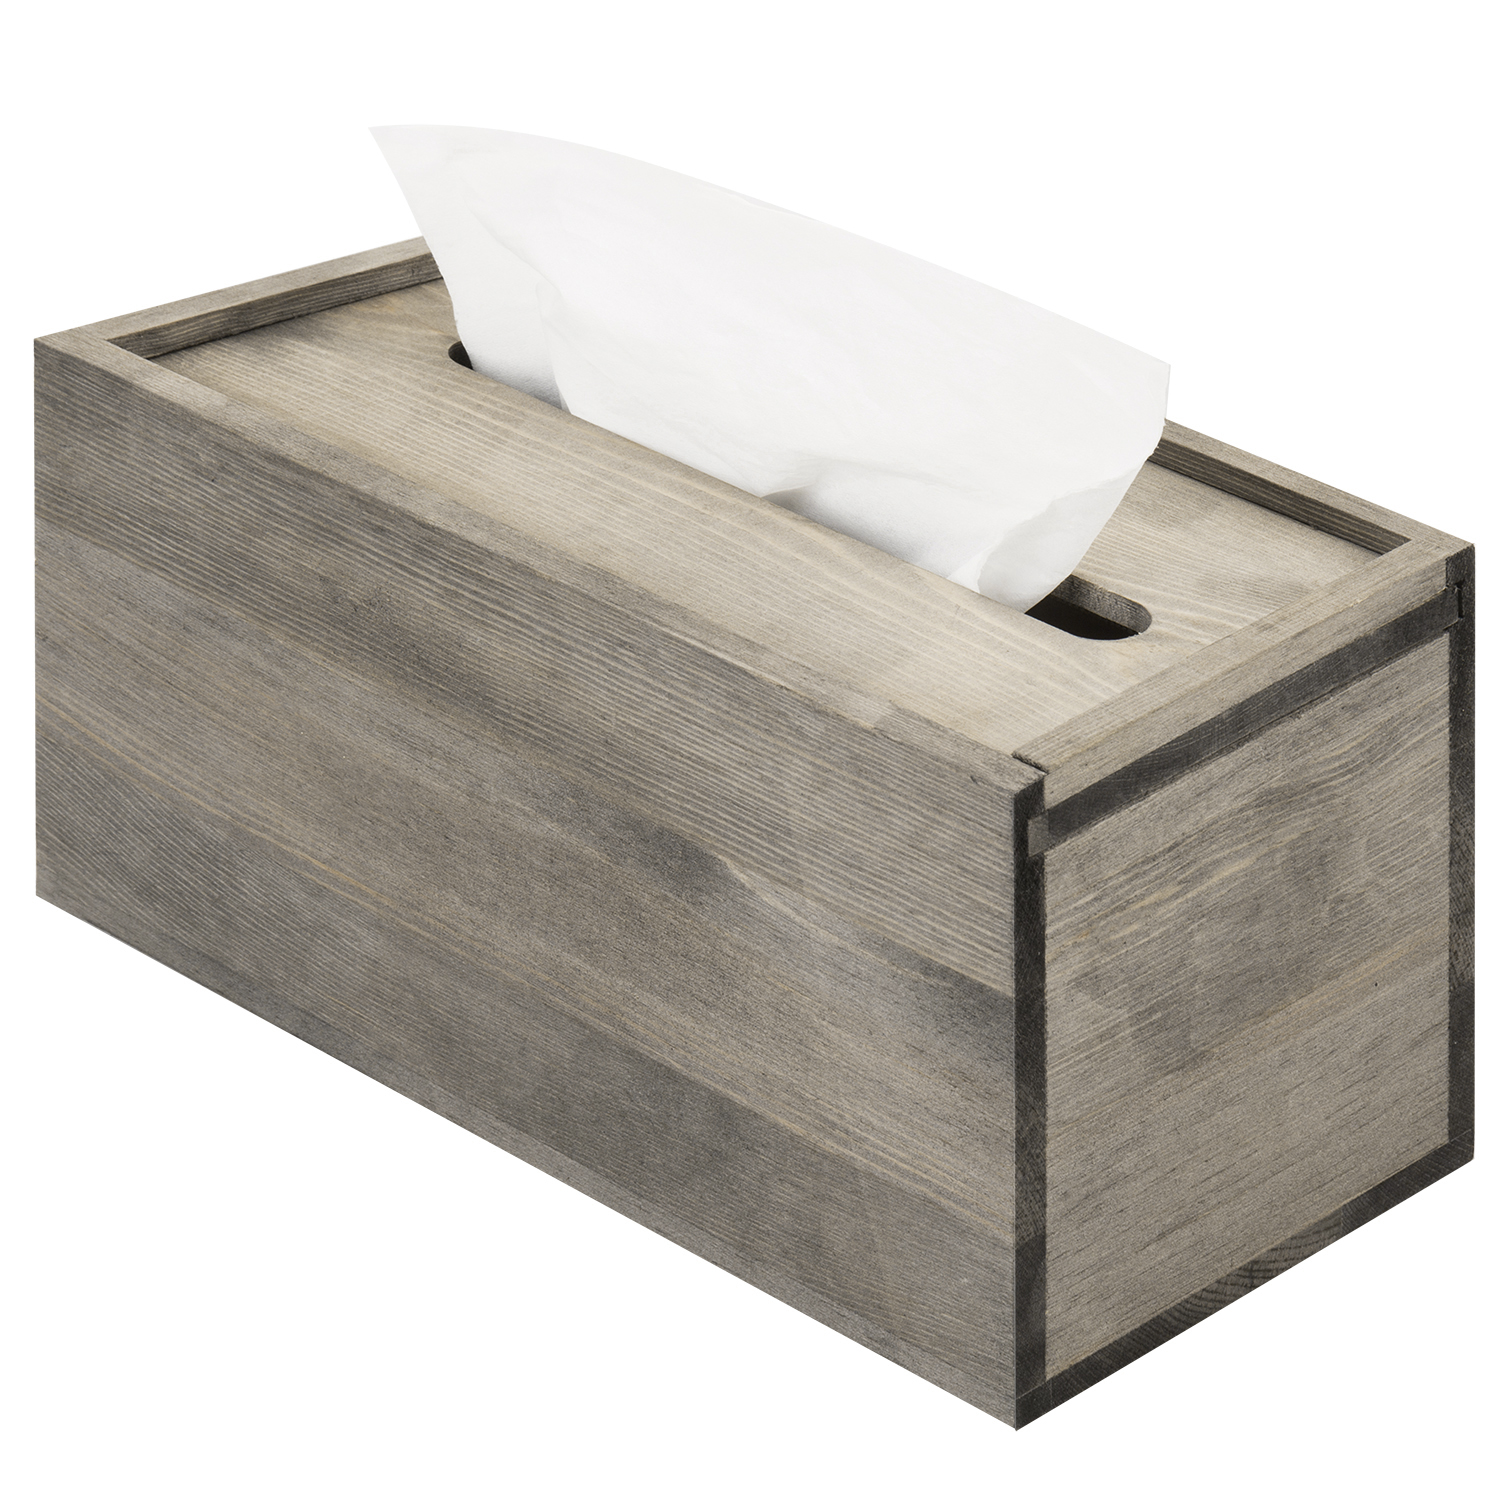 long tissue box cover